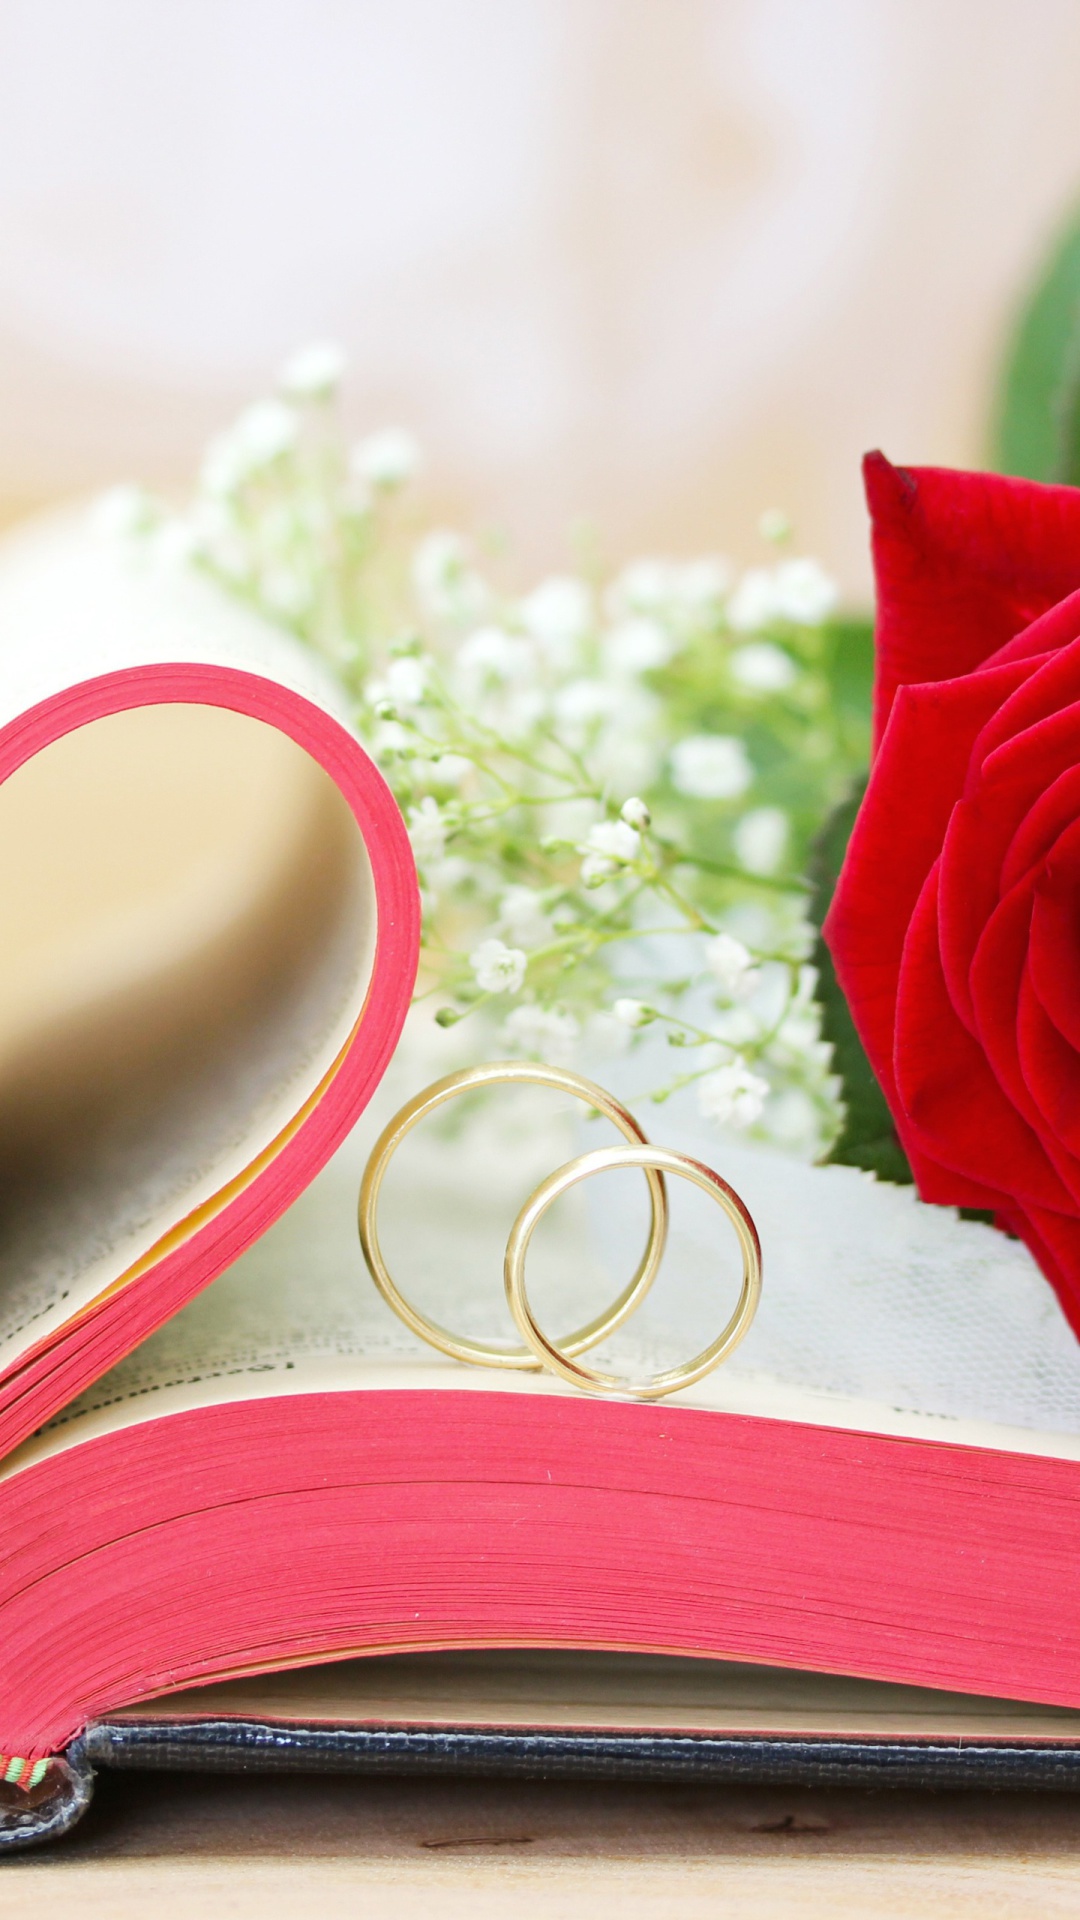 Wedding rings and book screenshot #1 1080x1920